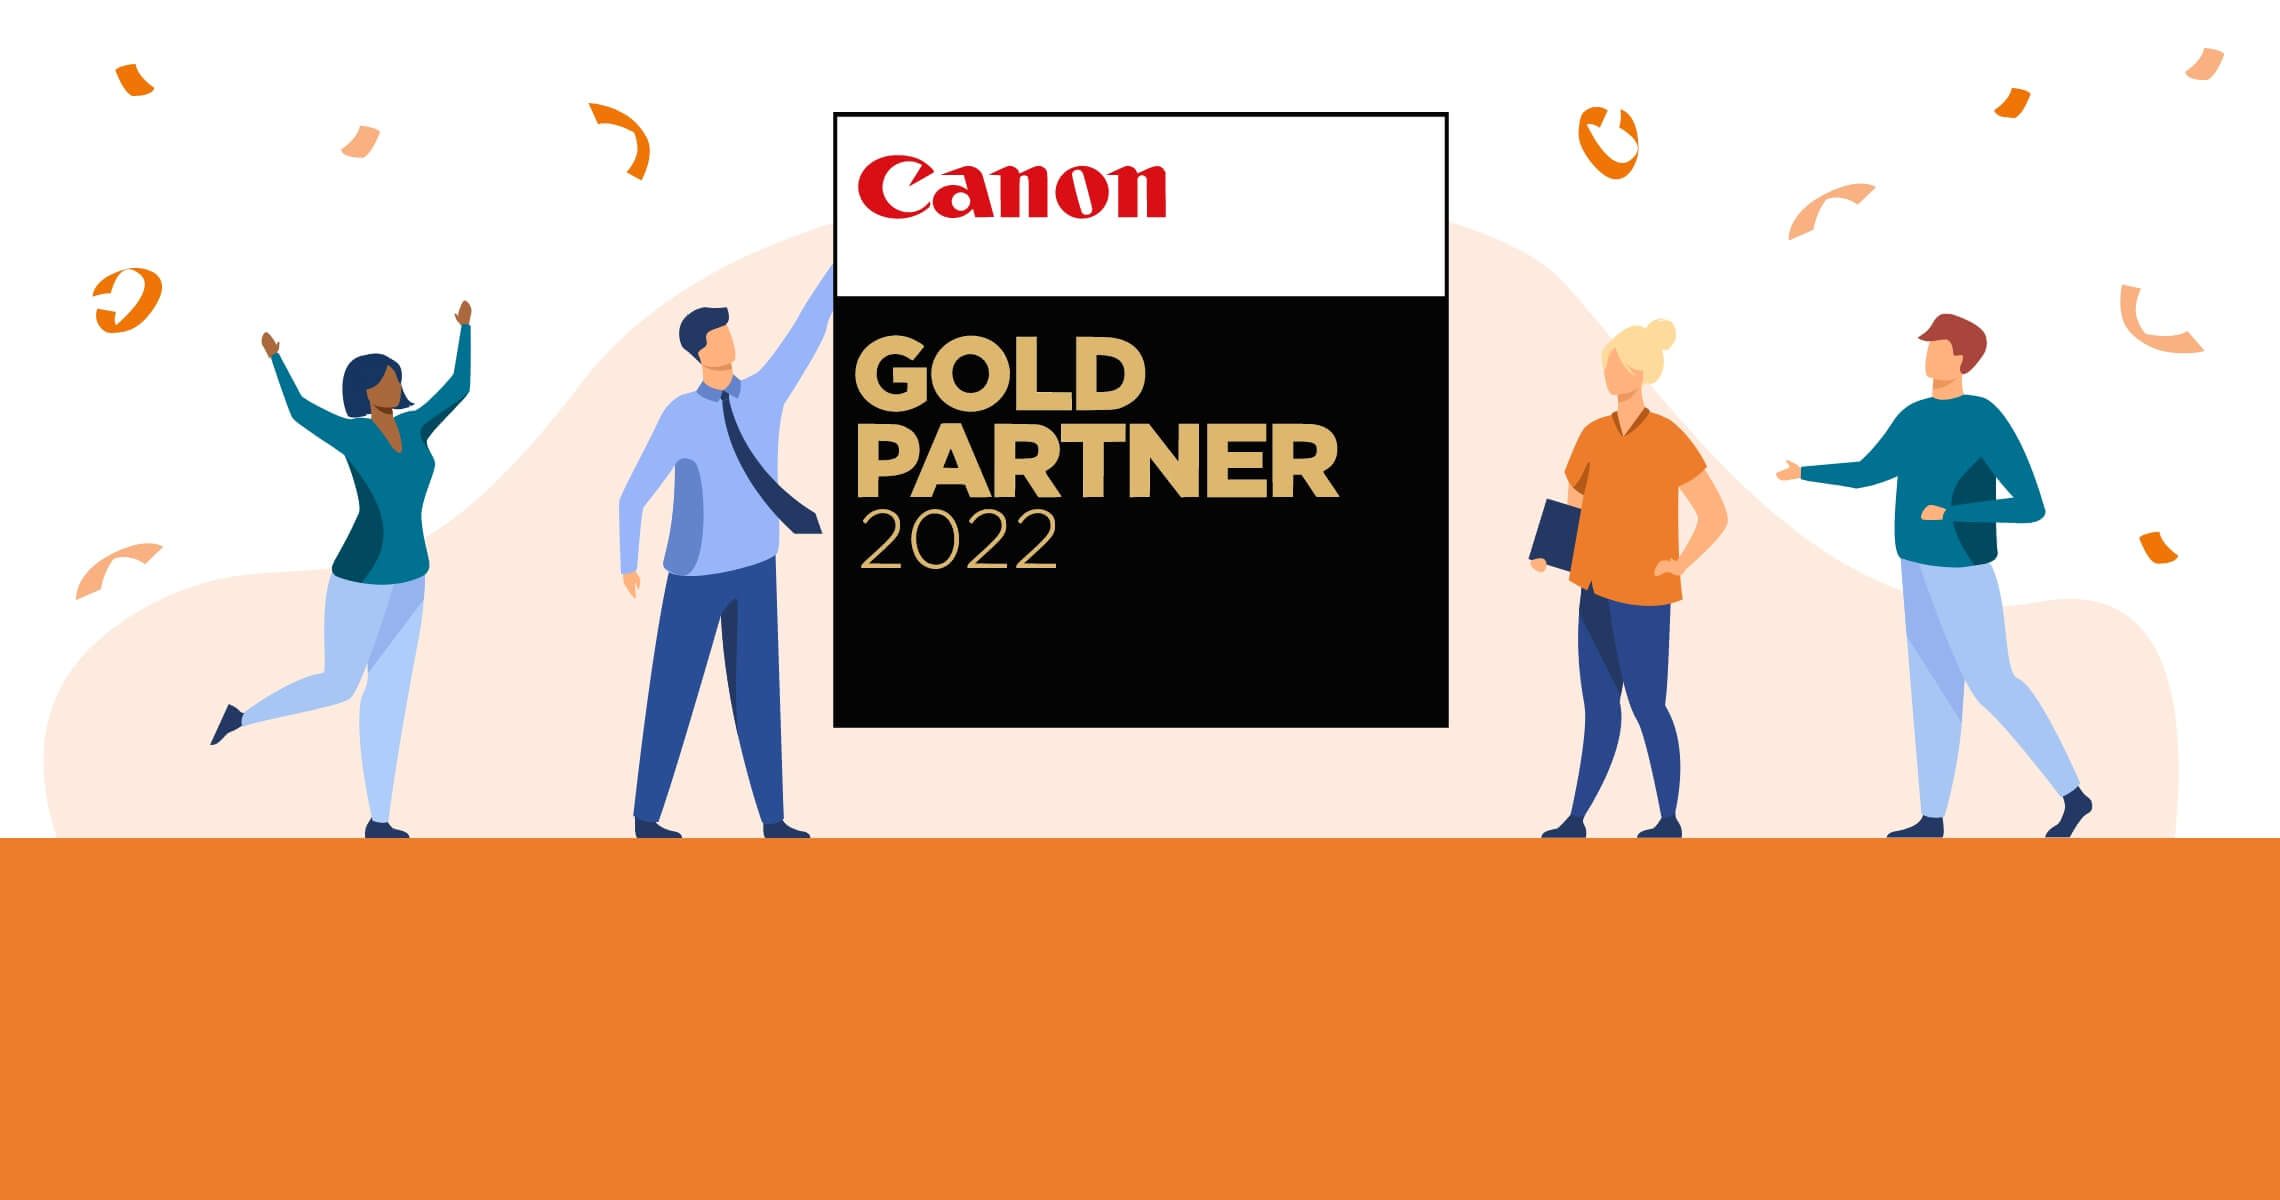 Cannon Gold Partner image